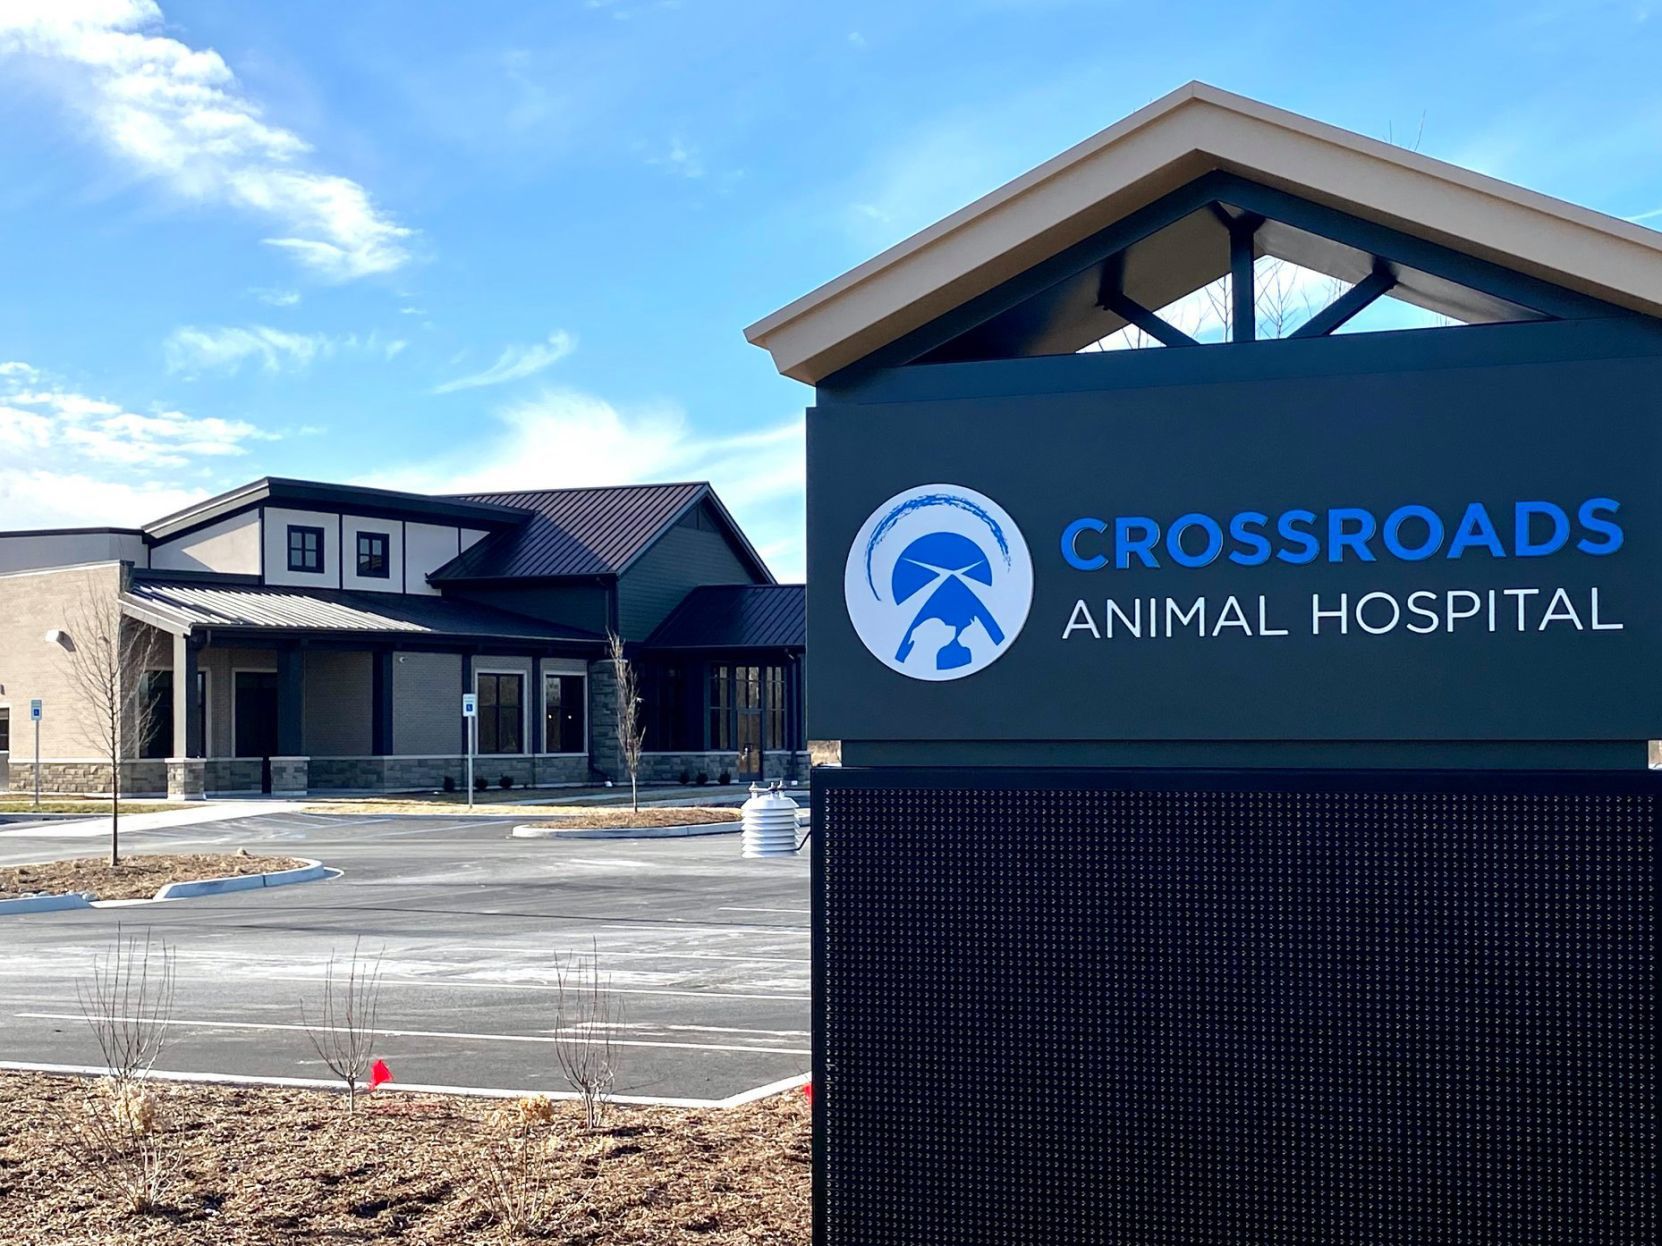 Crossroads Animal Hospital opens in 